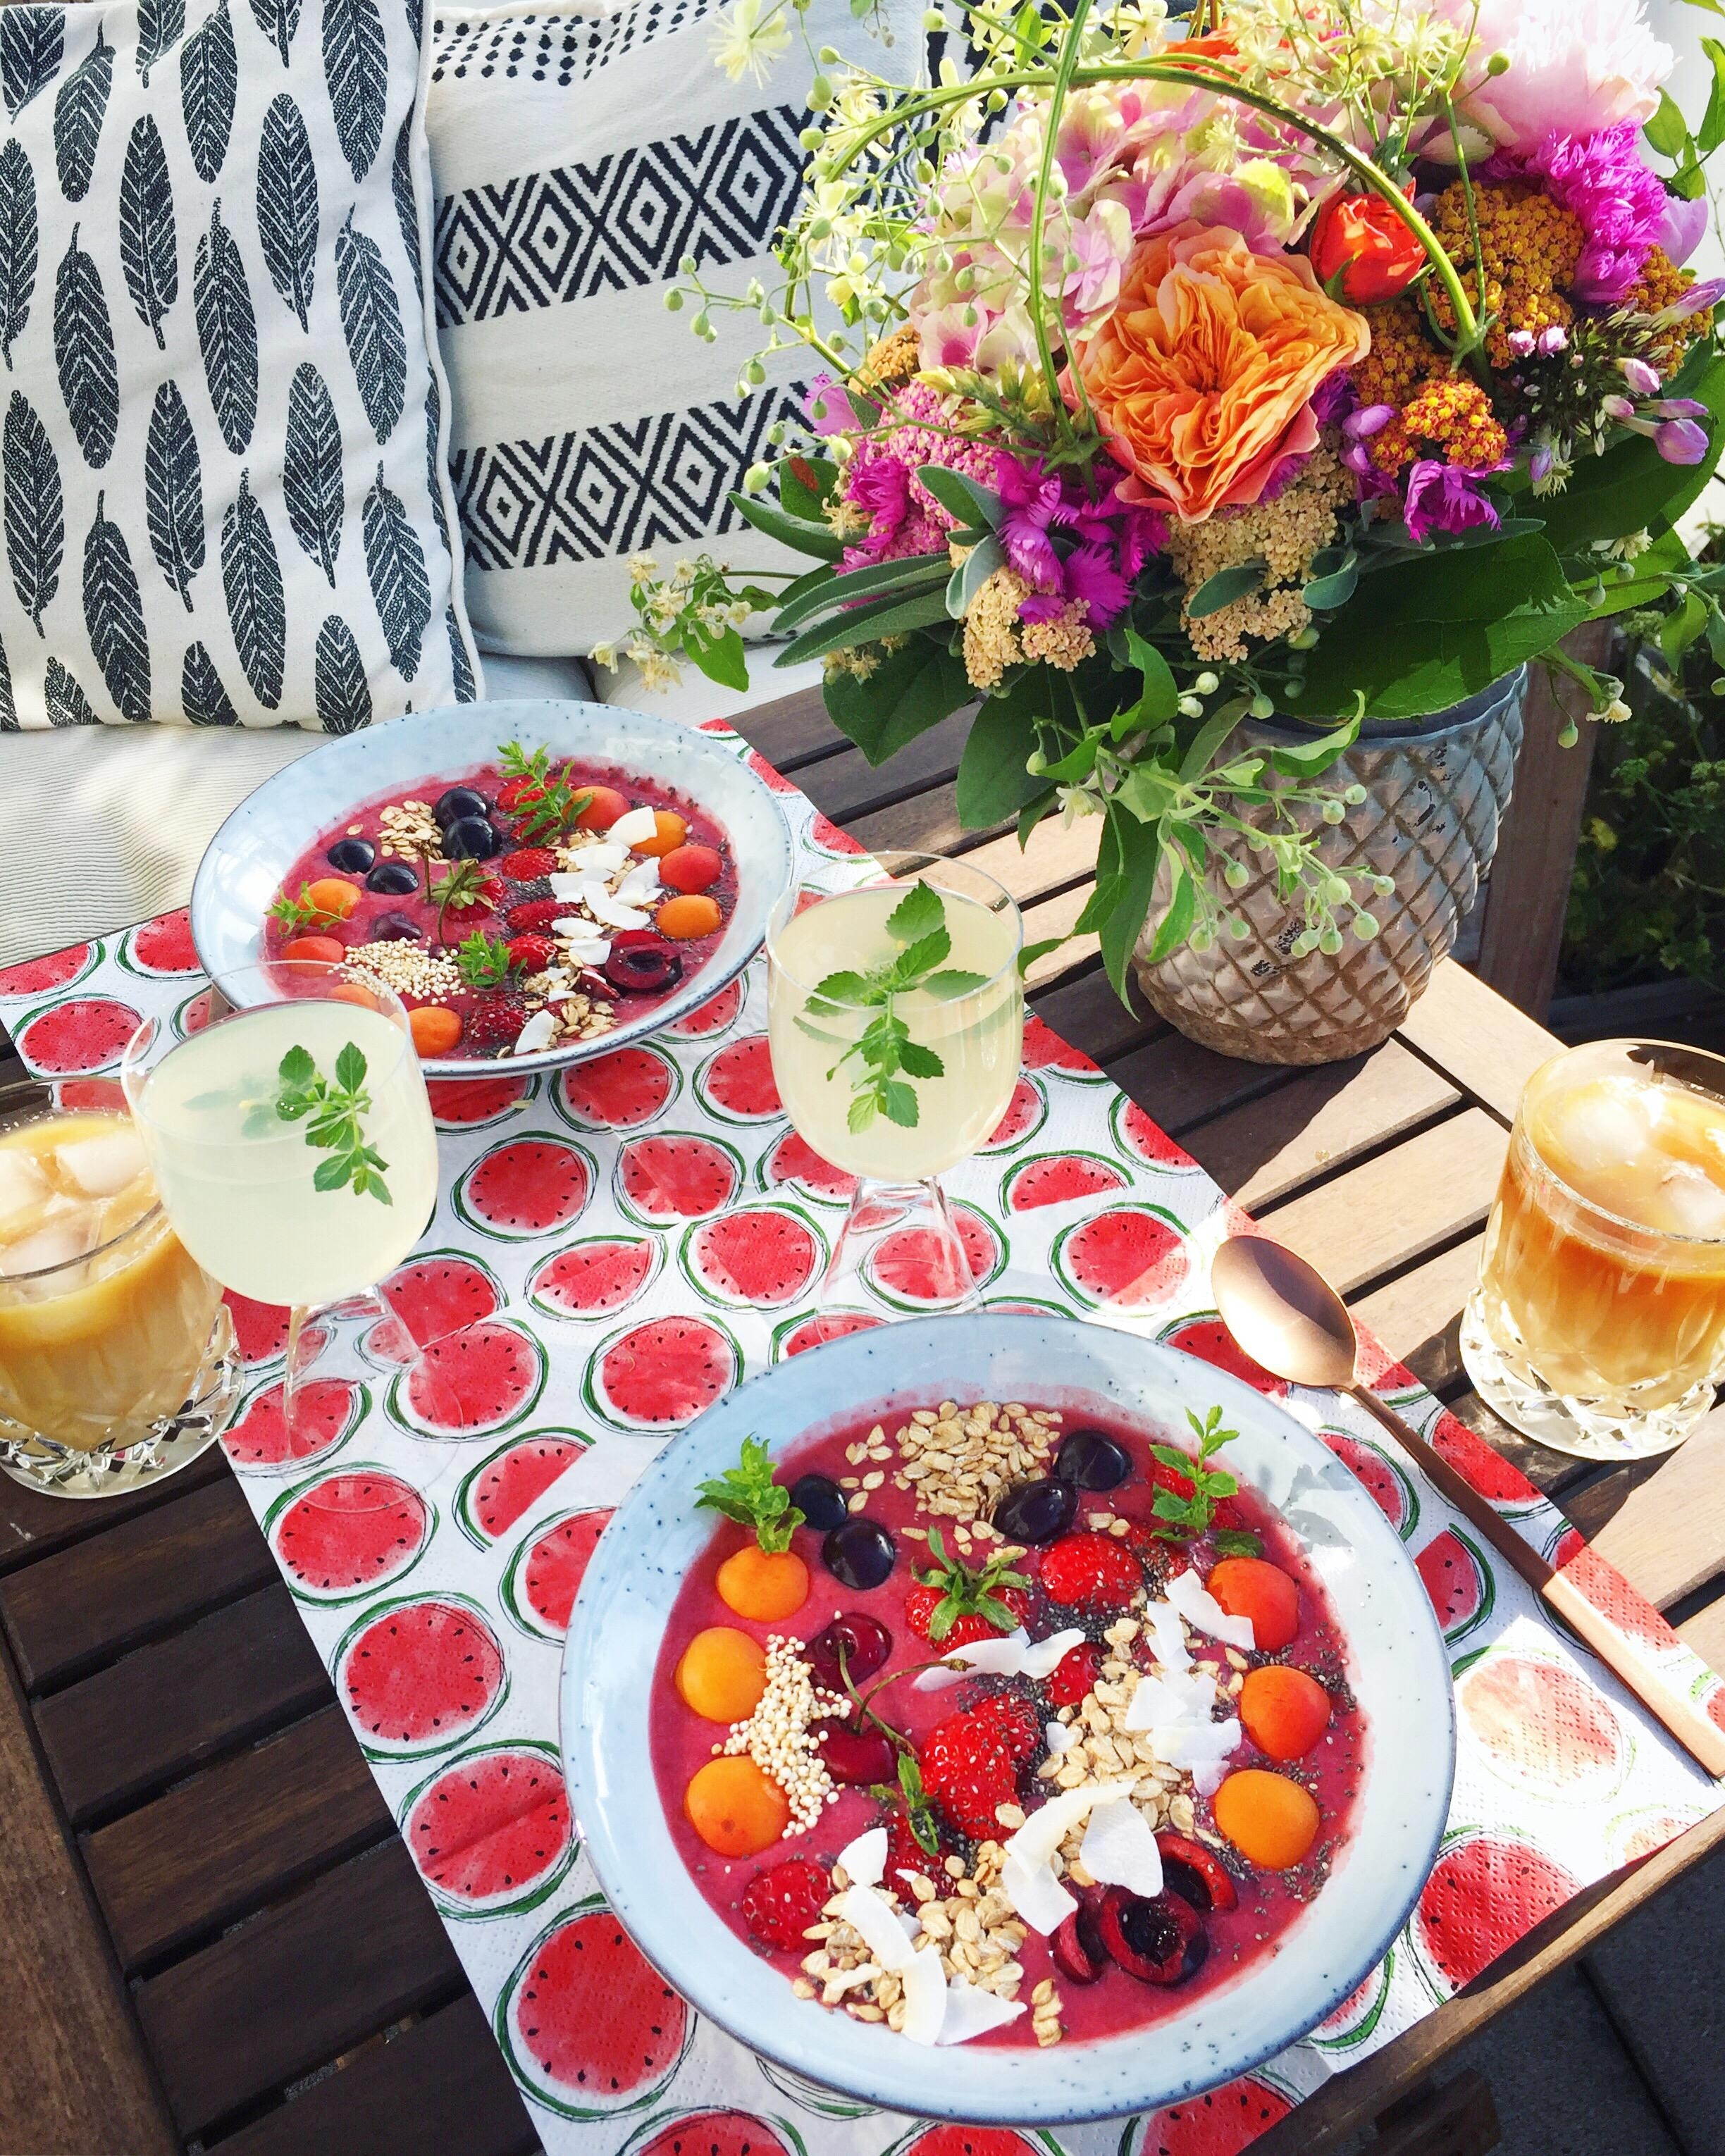 So muss Wochenende! 🍓☀️🌸
#smoothiebowl #terrasse #frühstück #summerfeeling #outdoor #breakfast #bowl #flowers #balkon